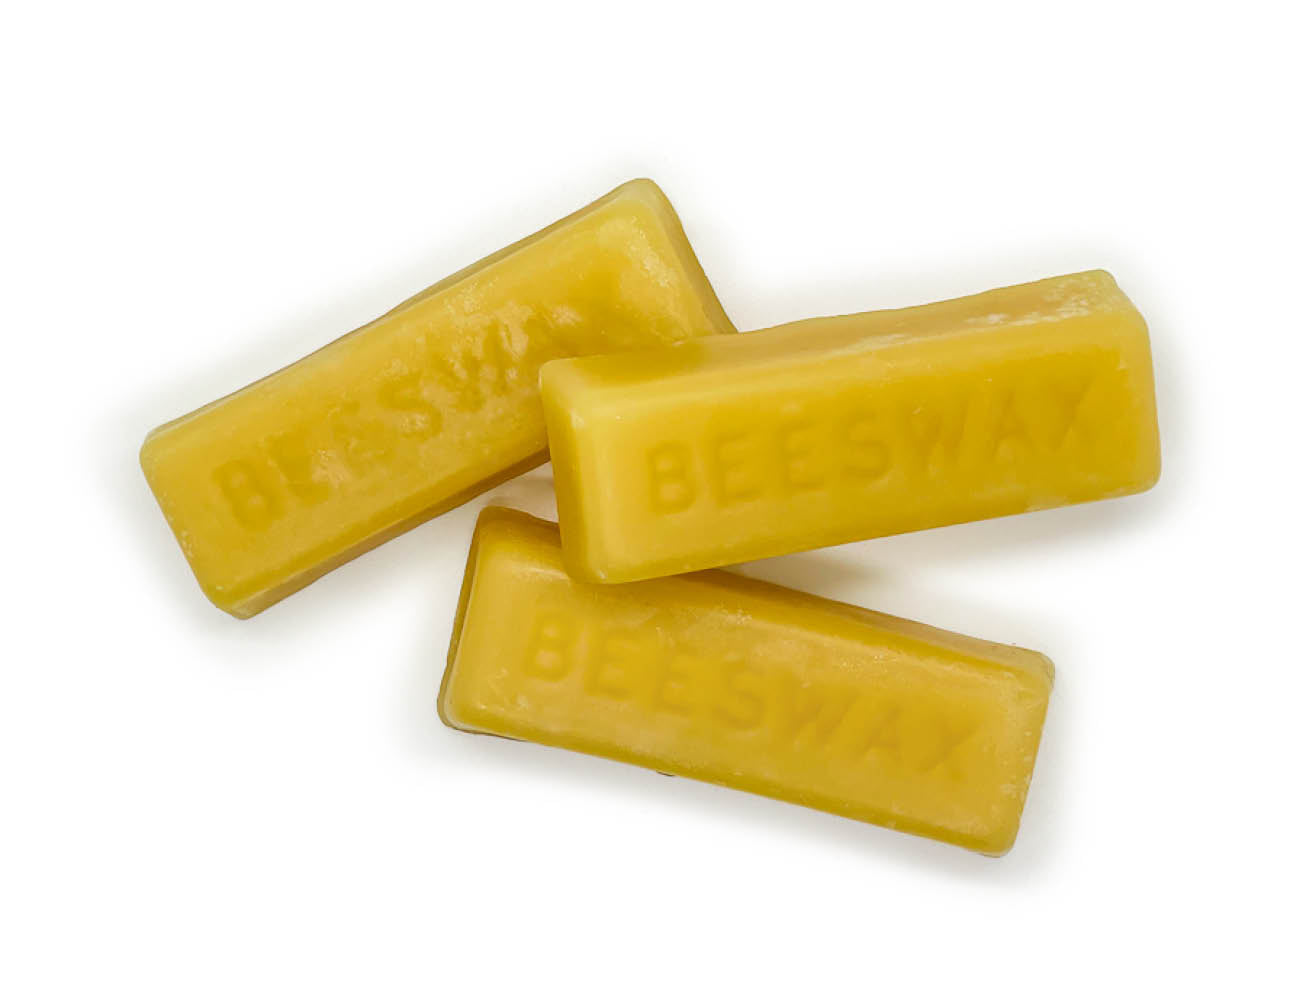 Pure Beeswax 1 oz Blocks